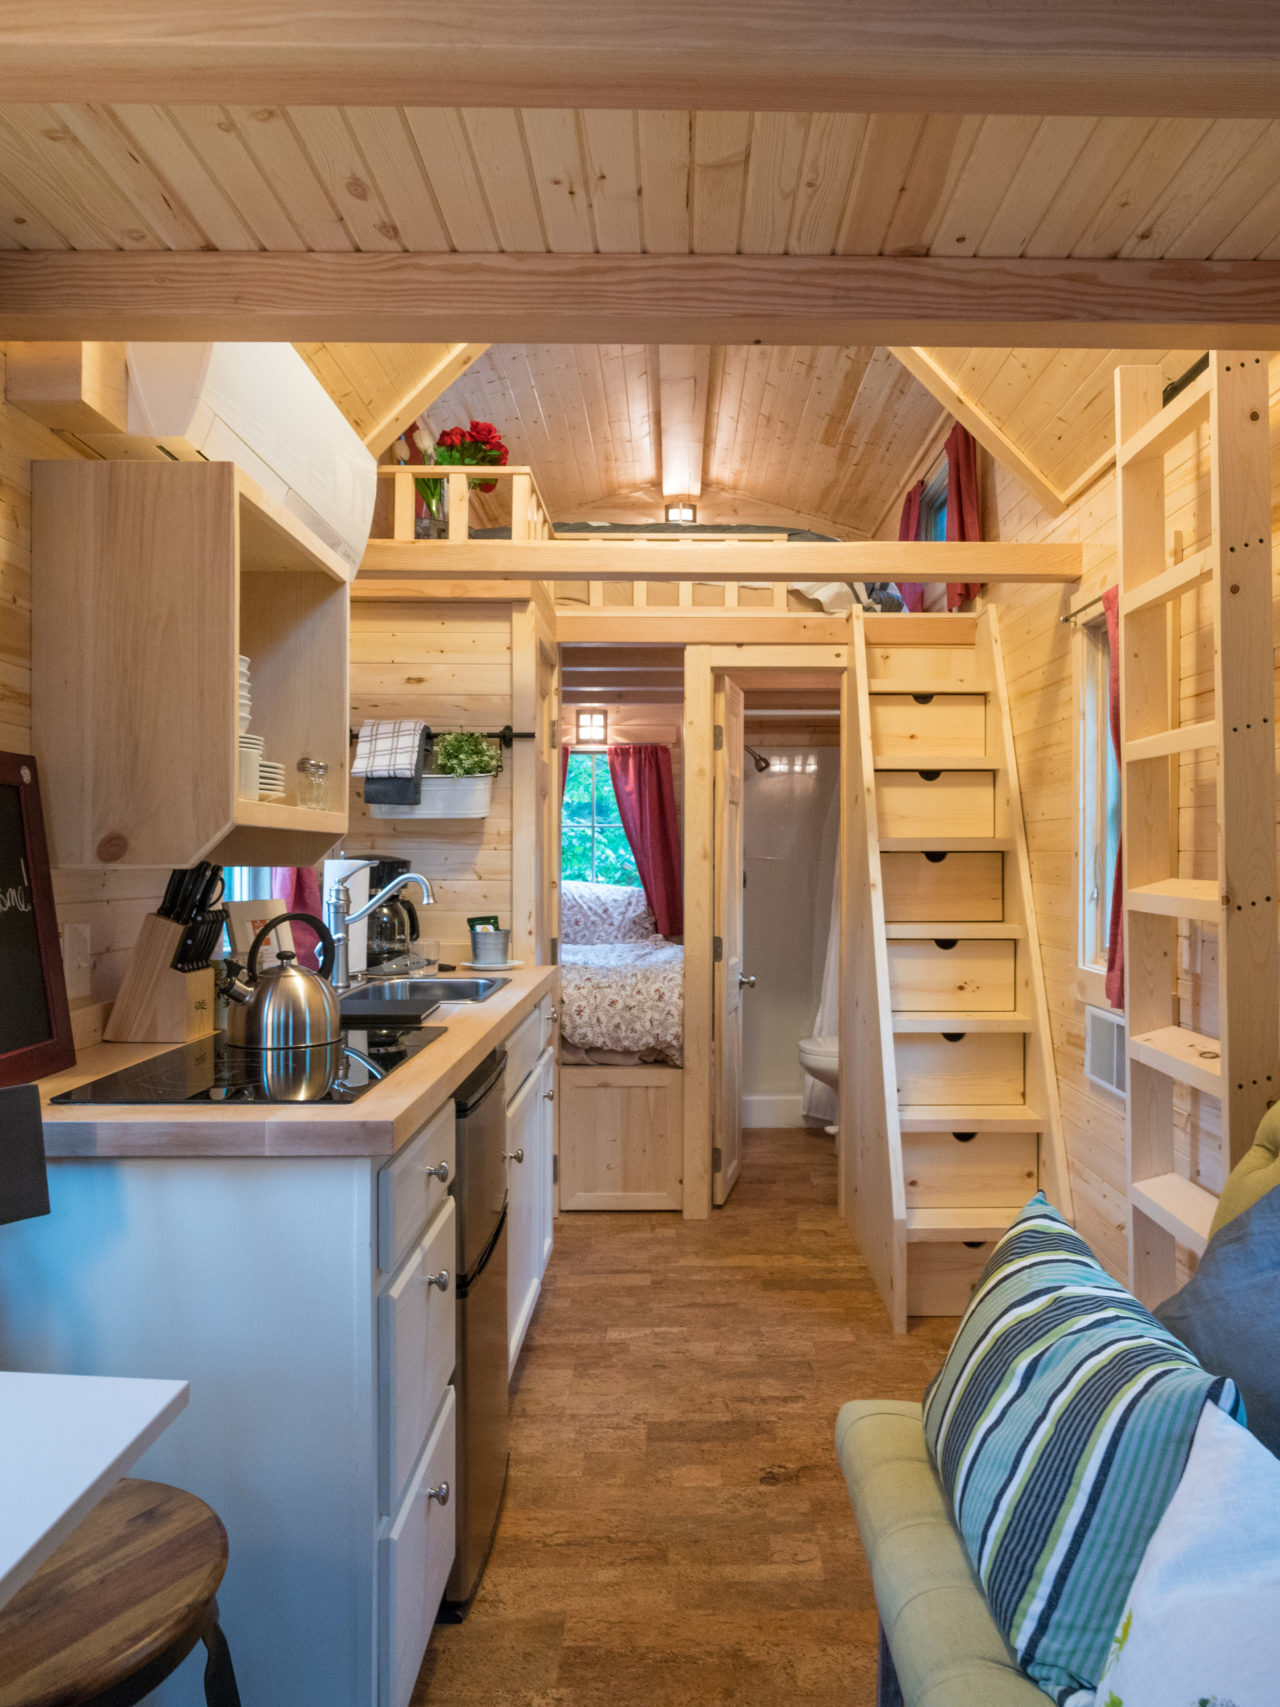 The interior of a Tumbleweed tiny home.